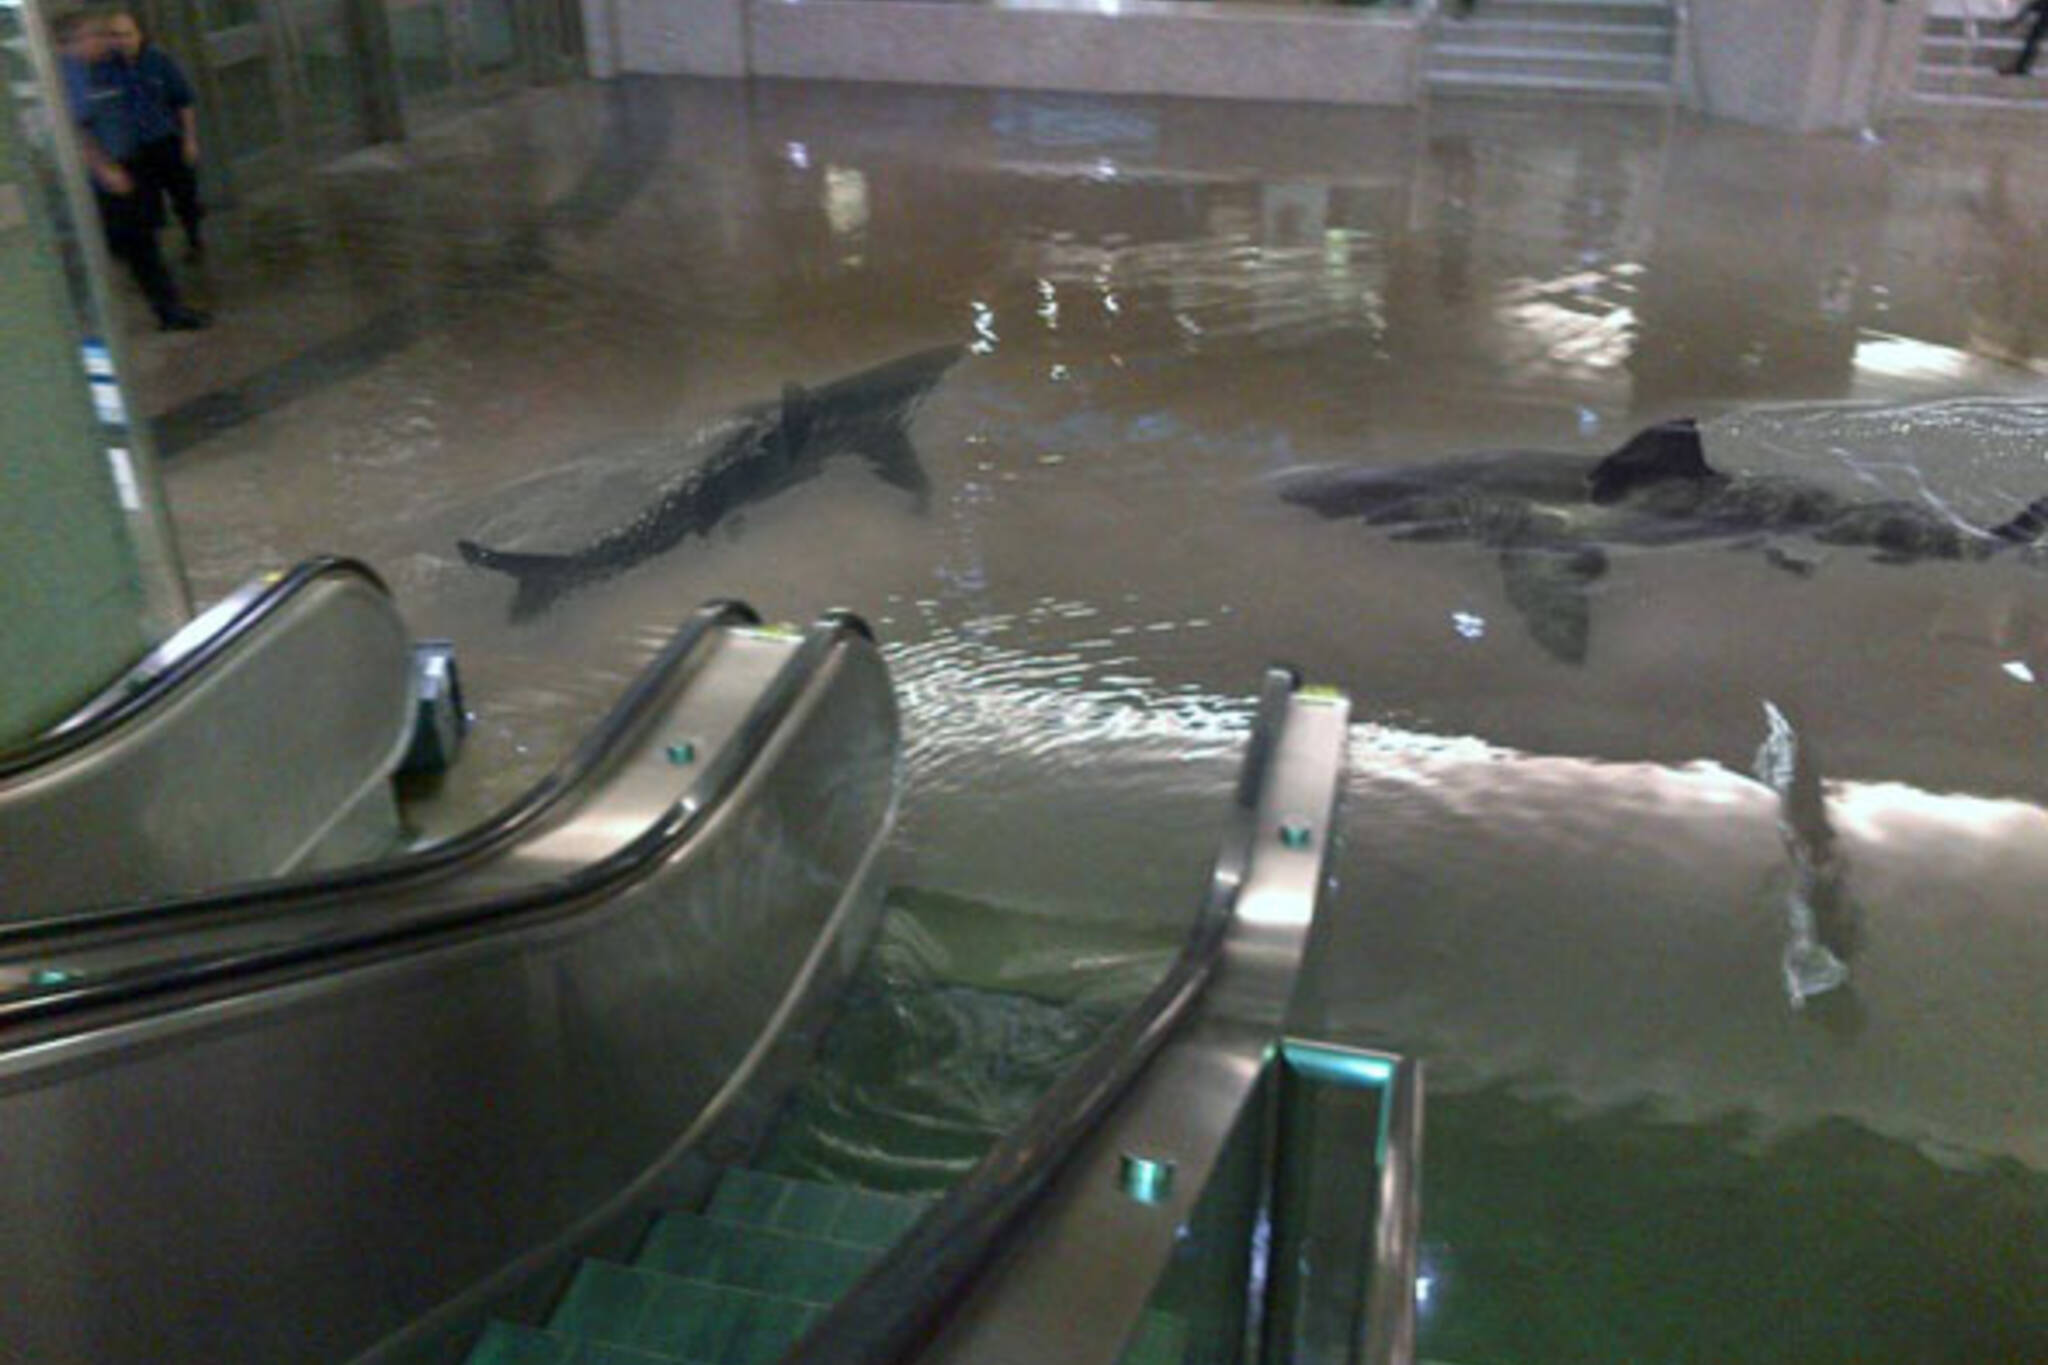 Union Station flood sharks meme